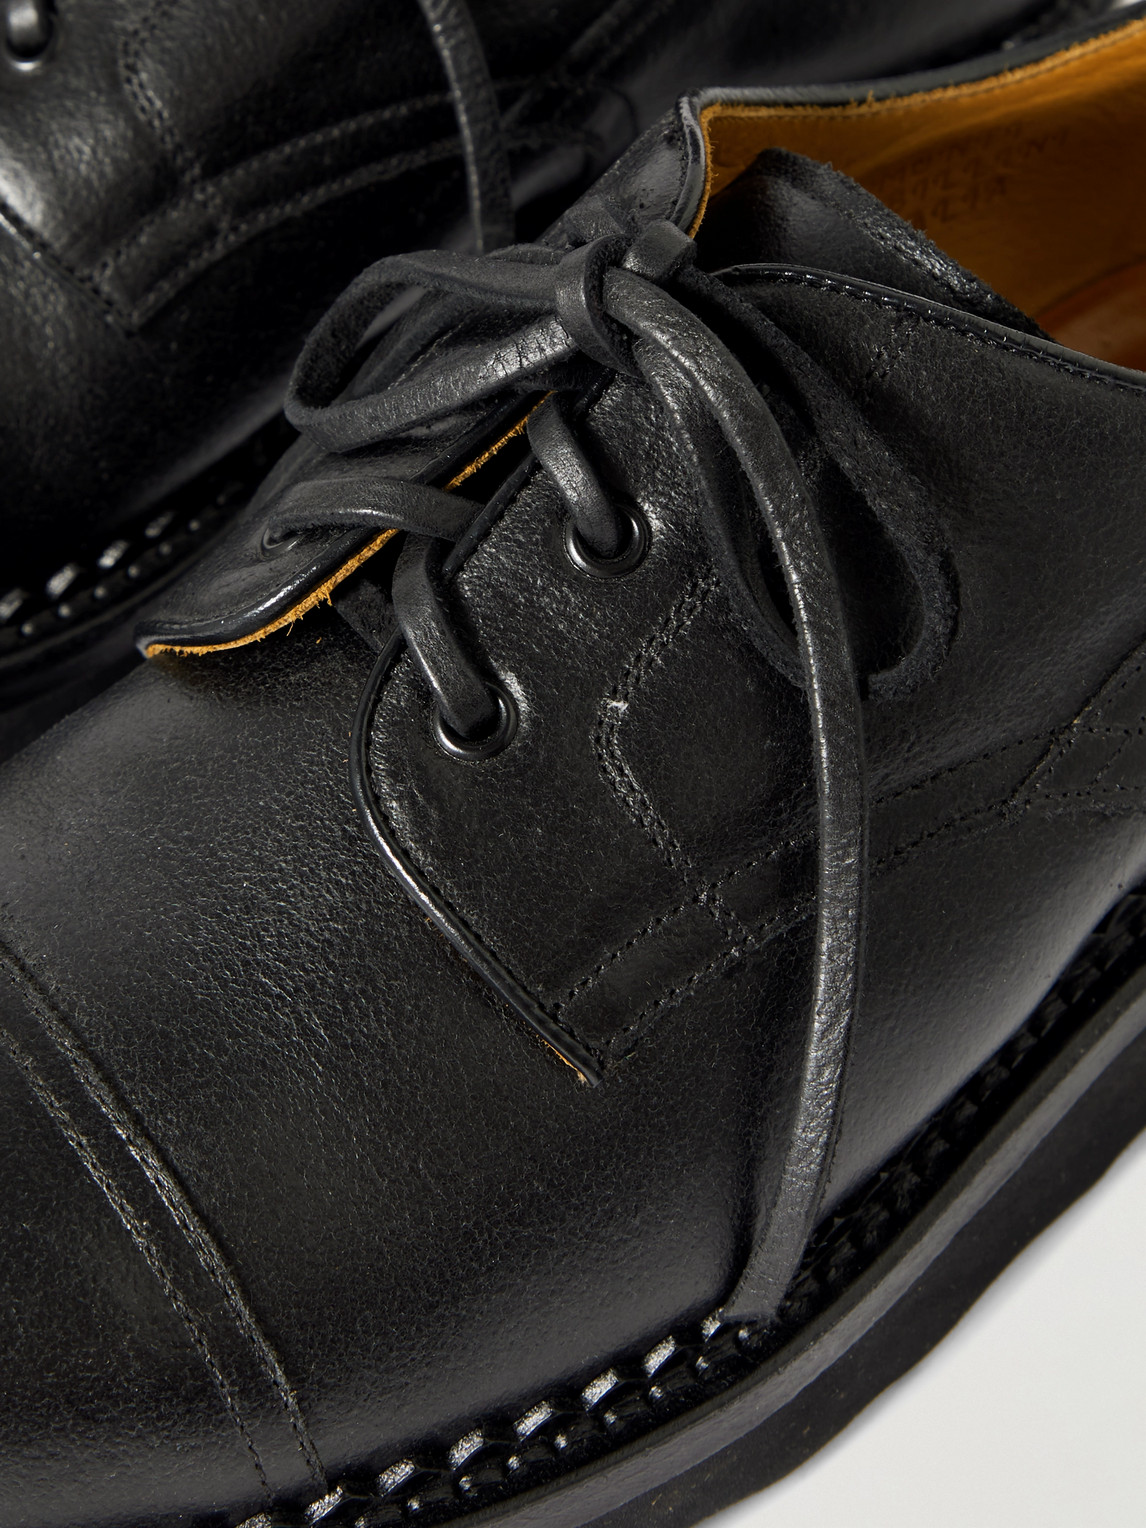 Shop Yuketen Leather Derby Shoes In Black